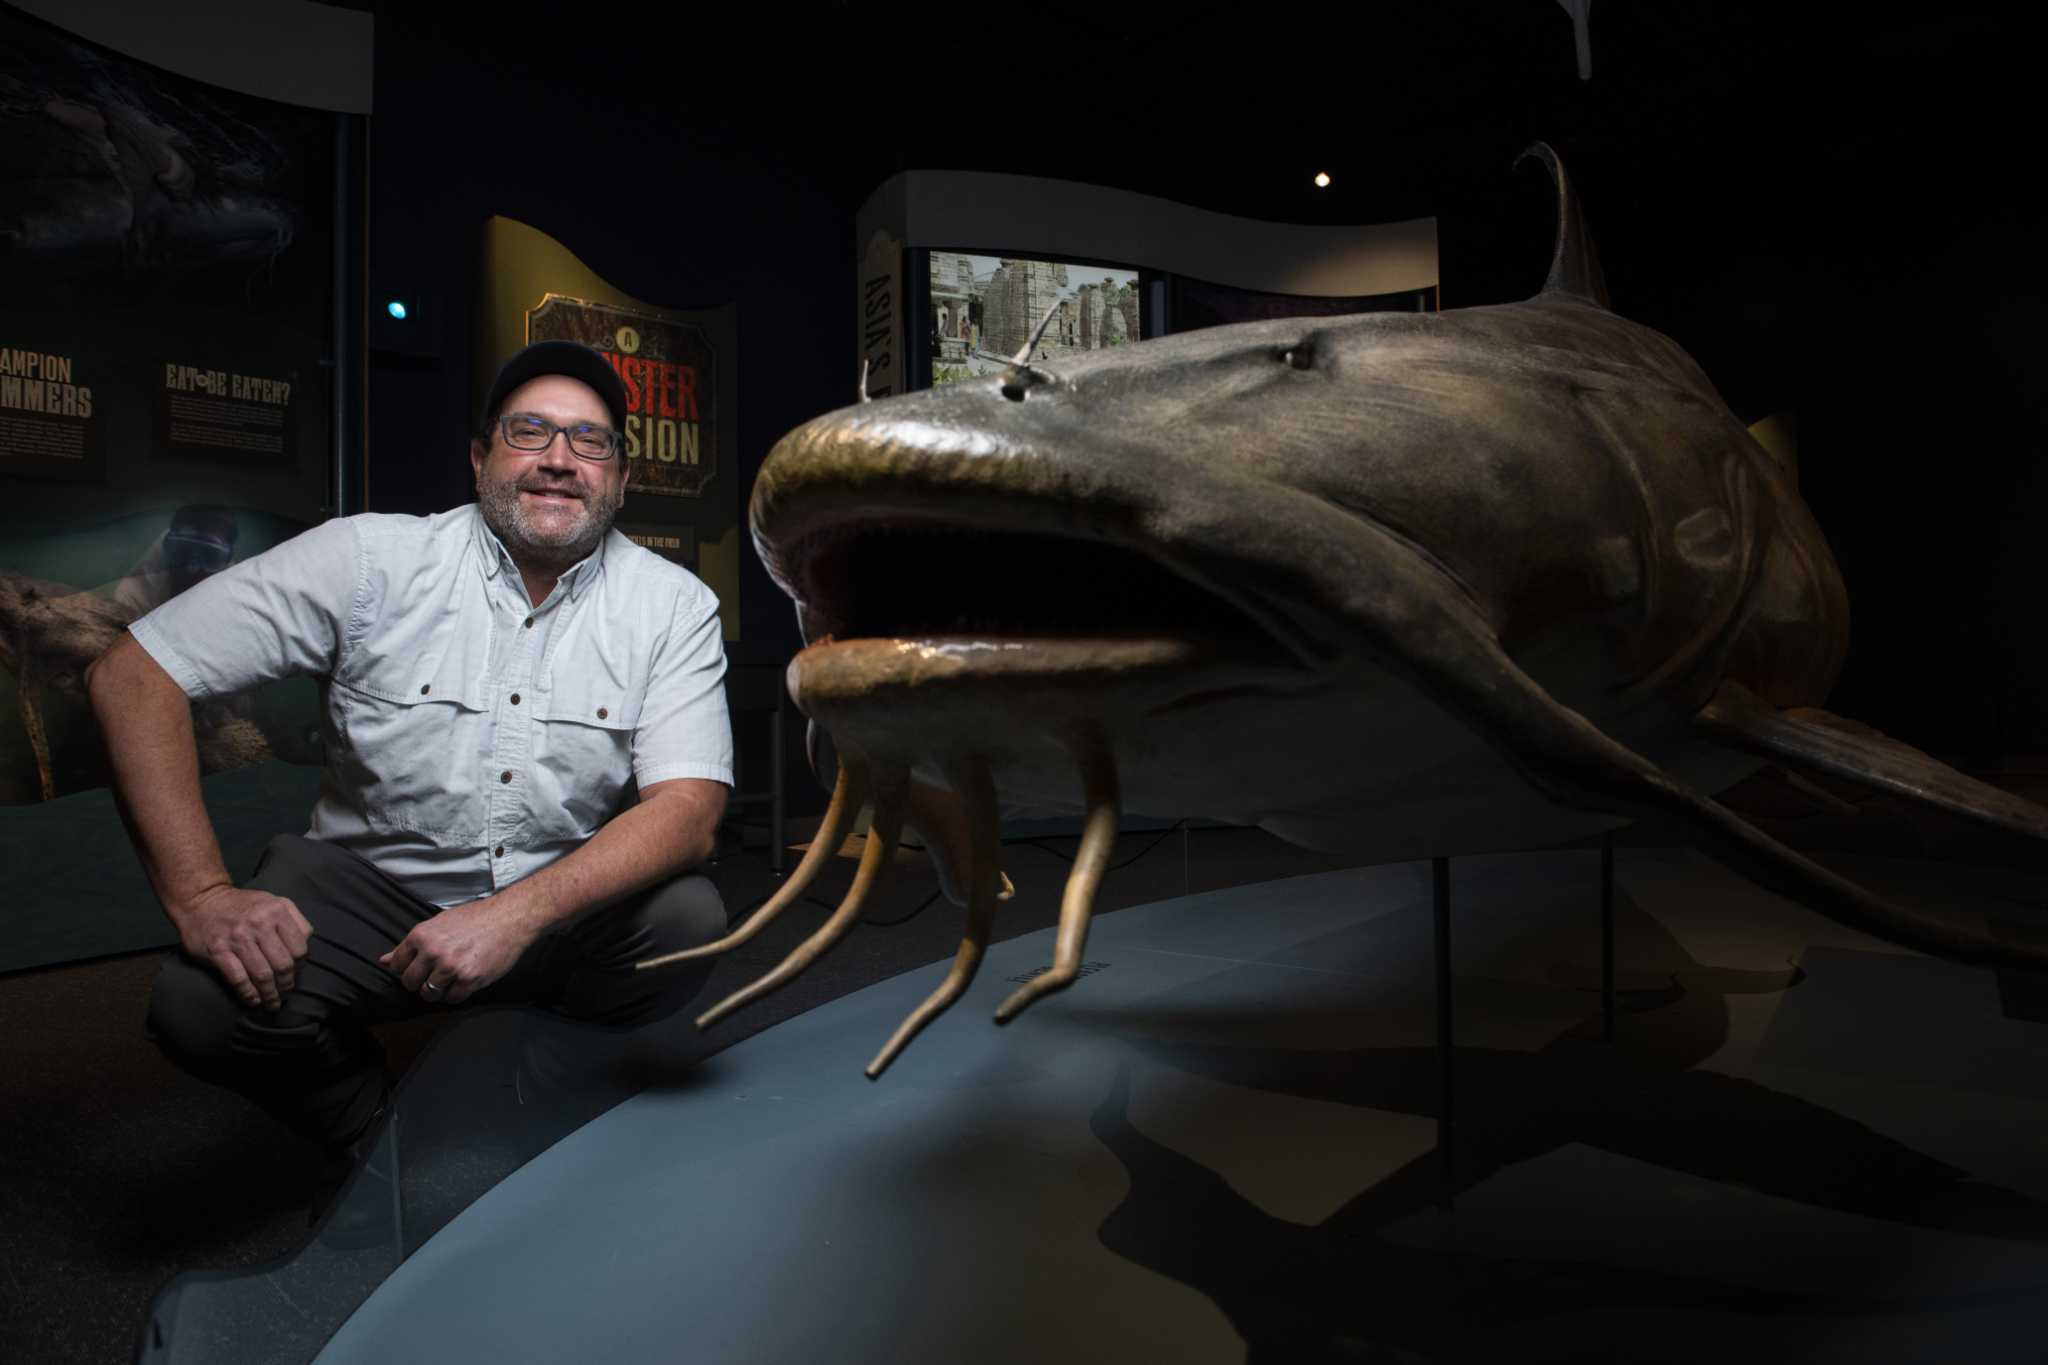 National Geographics giant fish San Antonio exhibit ending soon